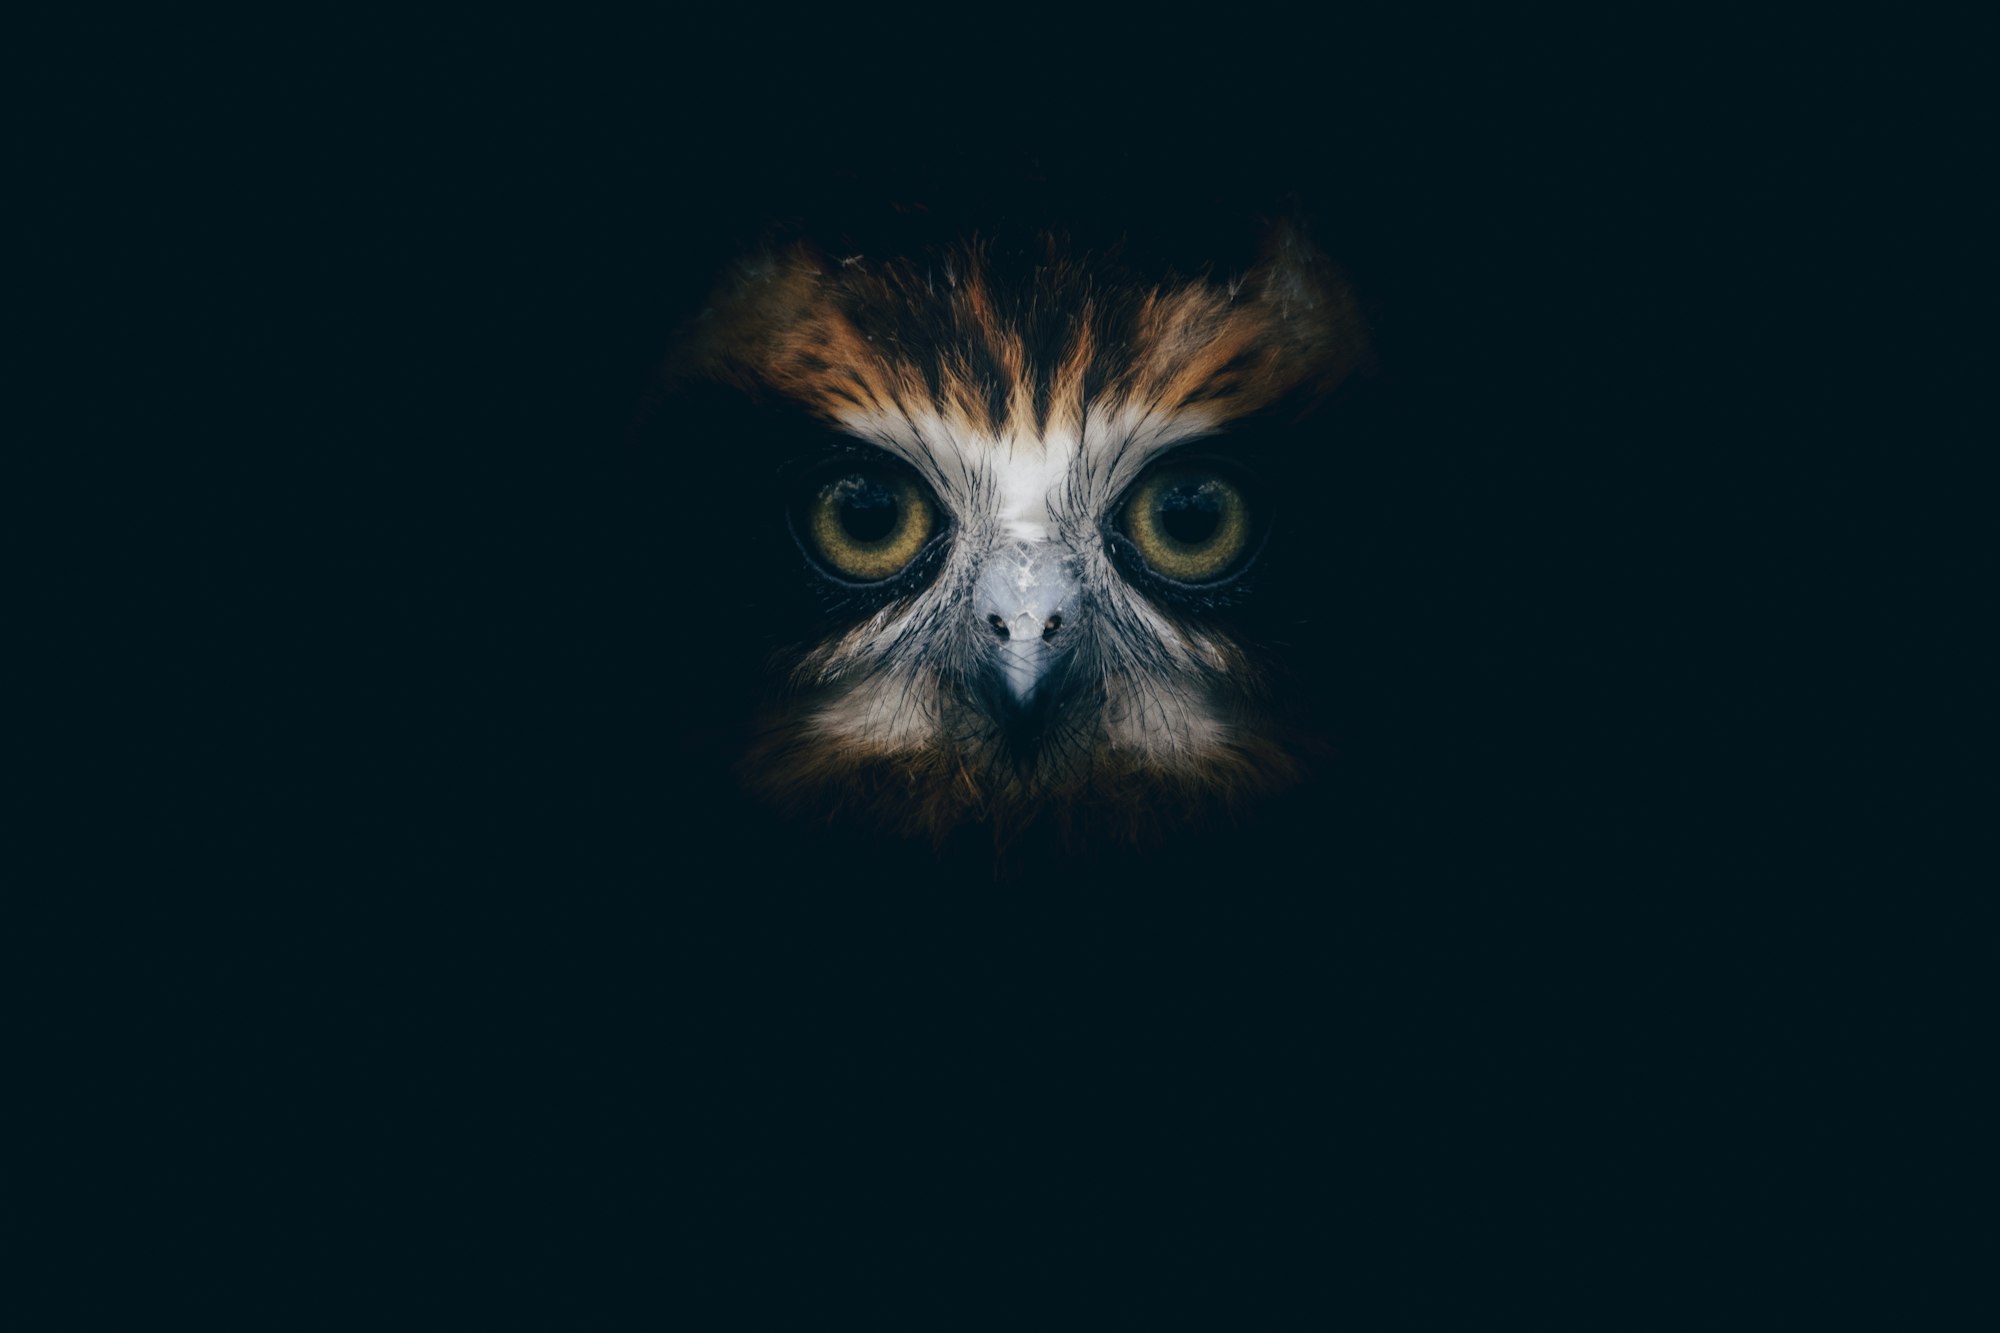 Owl, watching in the dark
